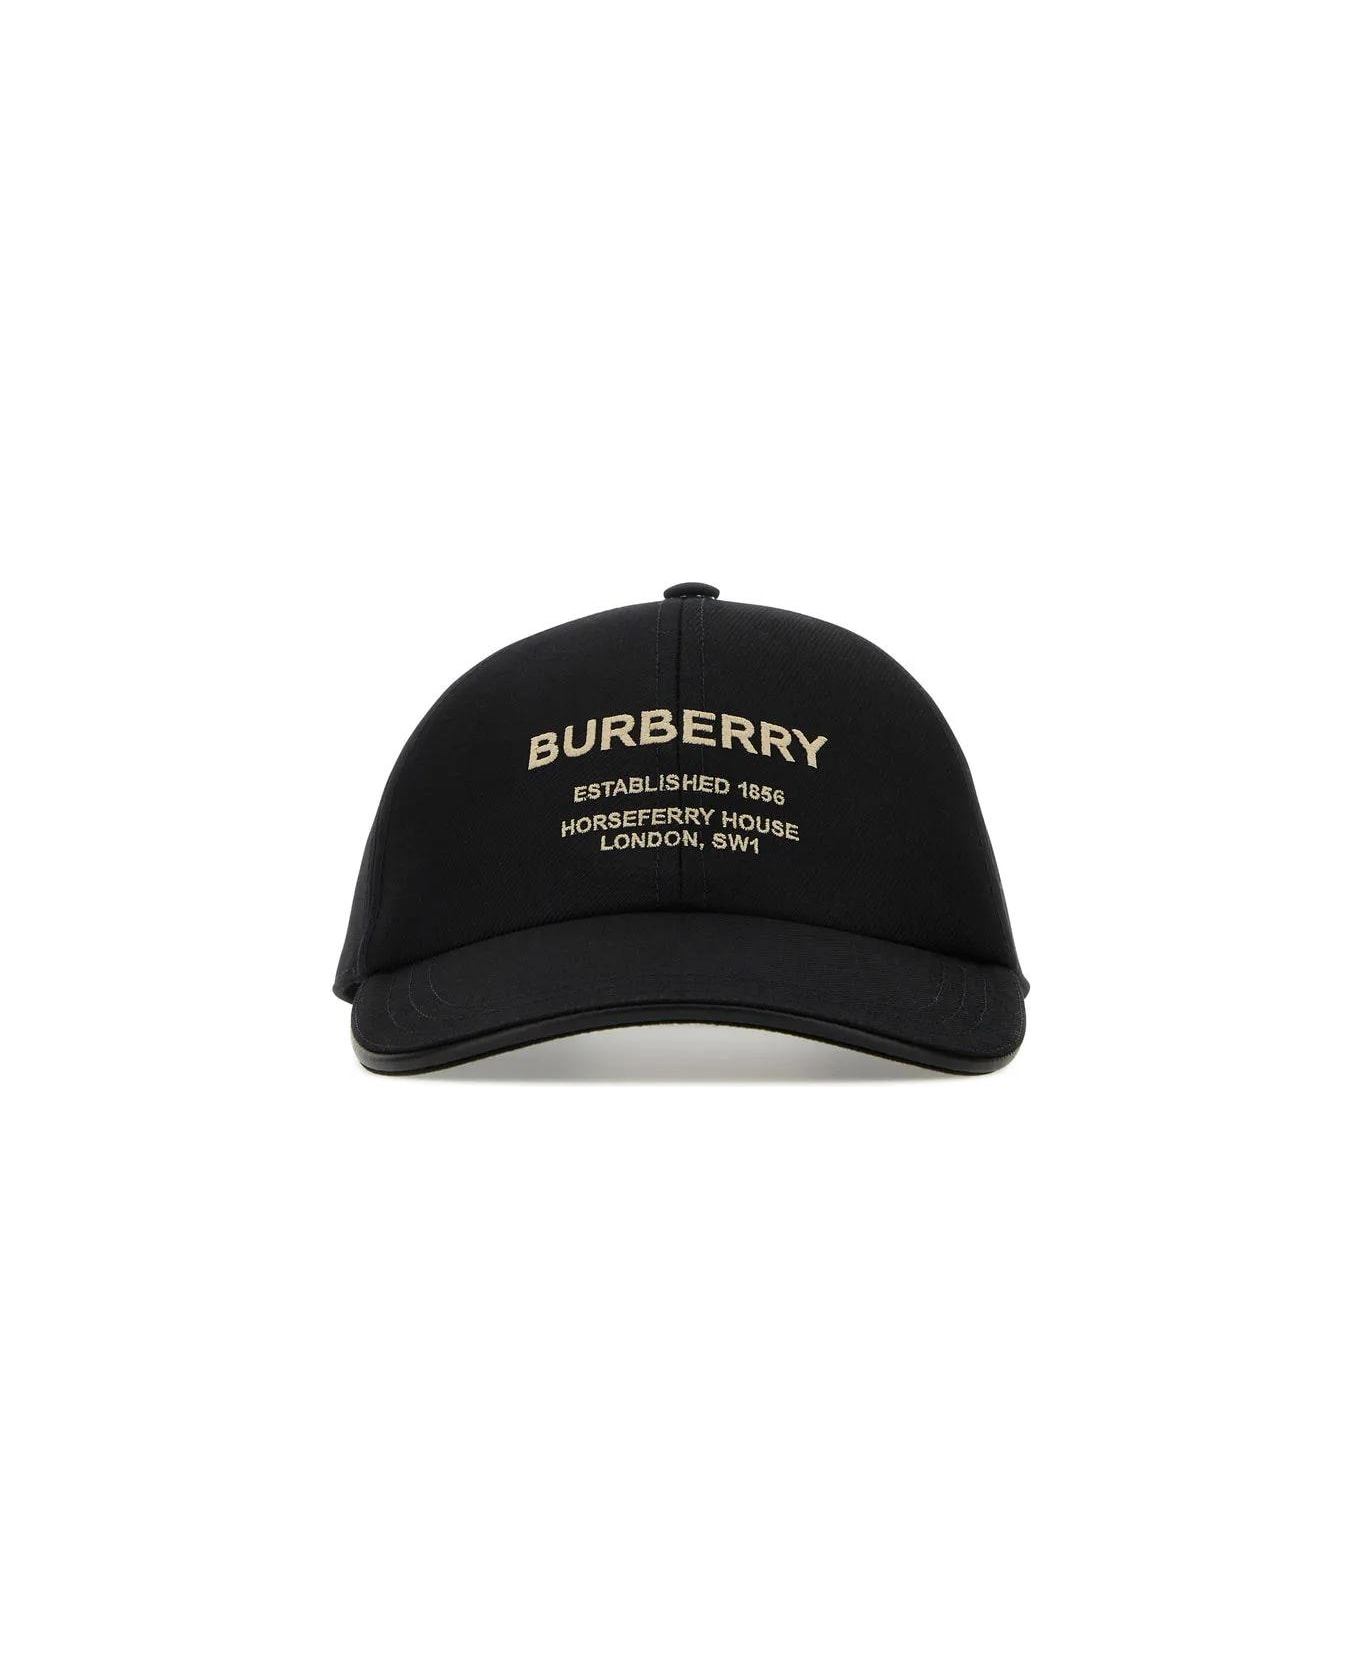 Burberry Black Cotton Baseball Cap - Black